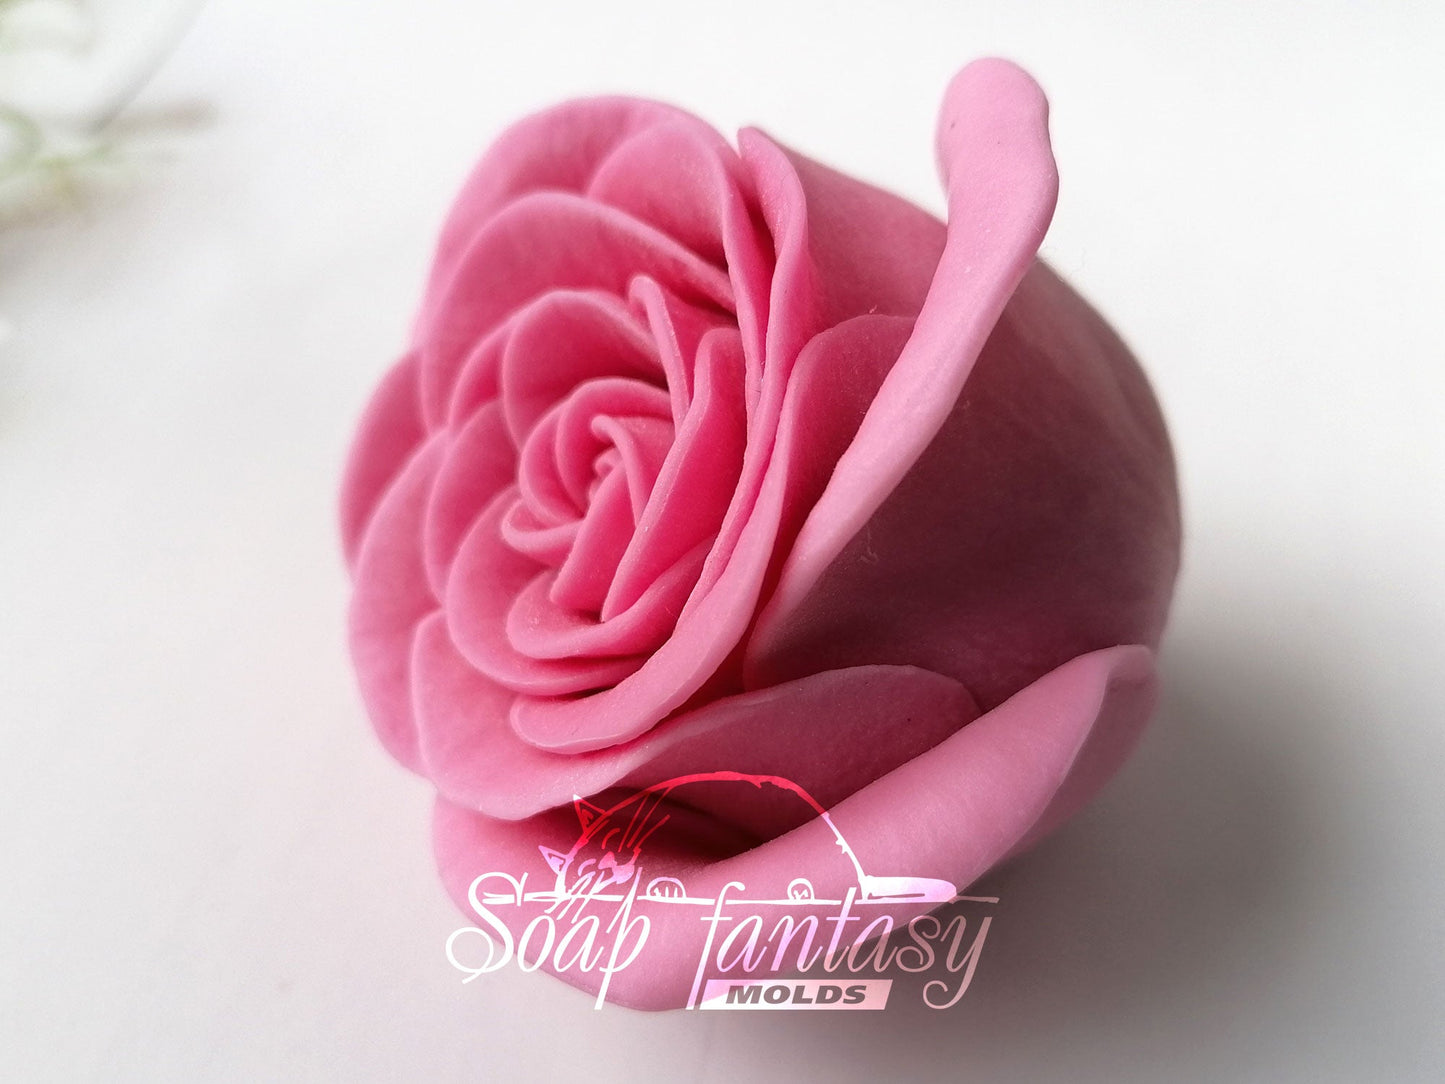 GARAGE SALE >> Porcelain rose #3 silicone mold for soap making